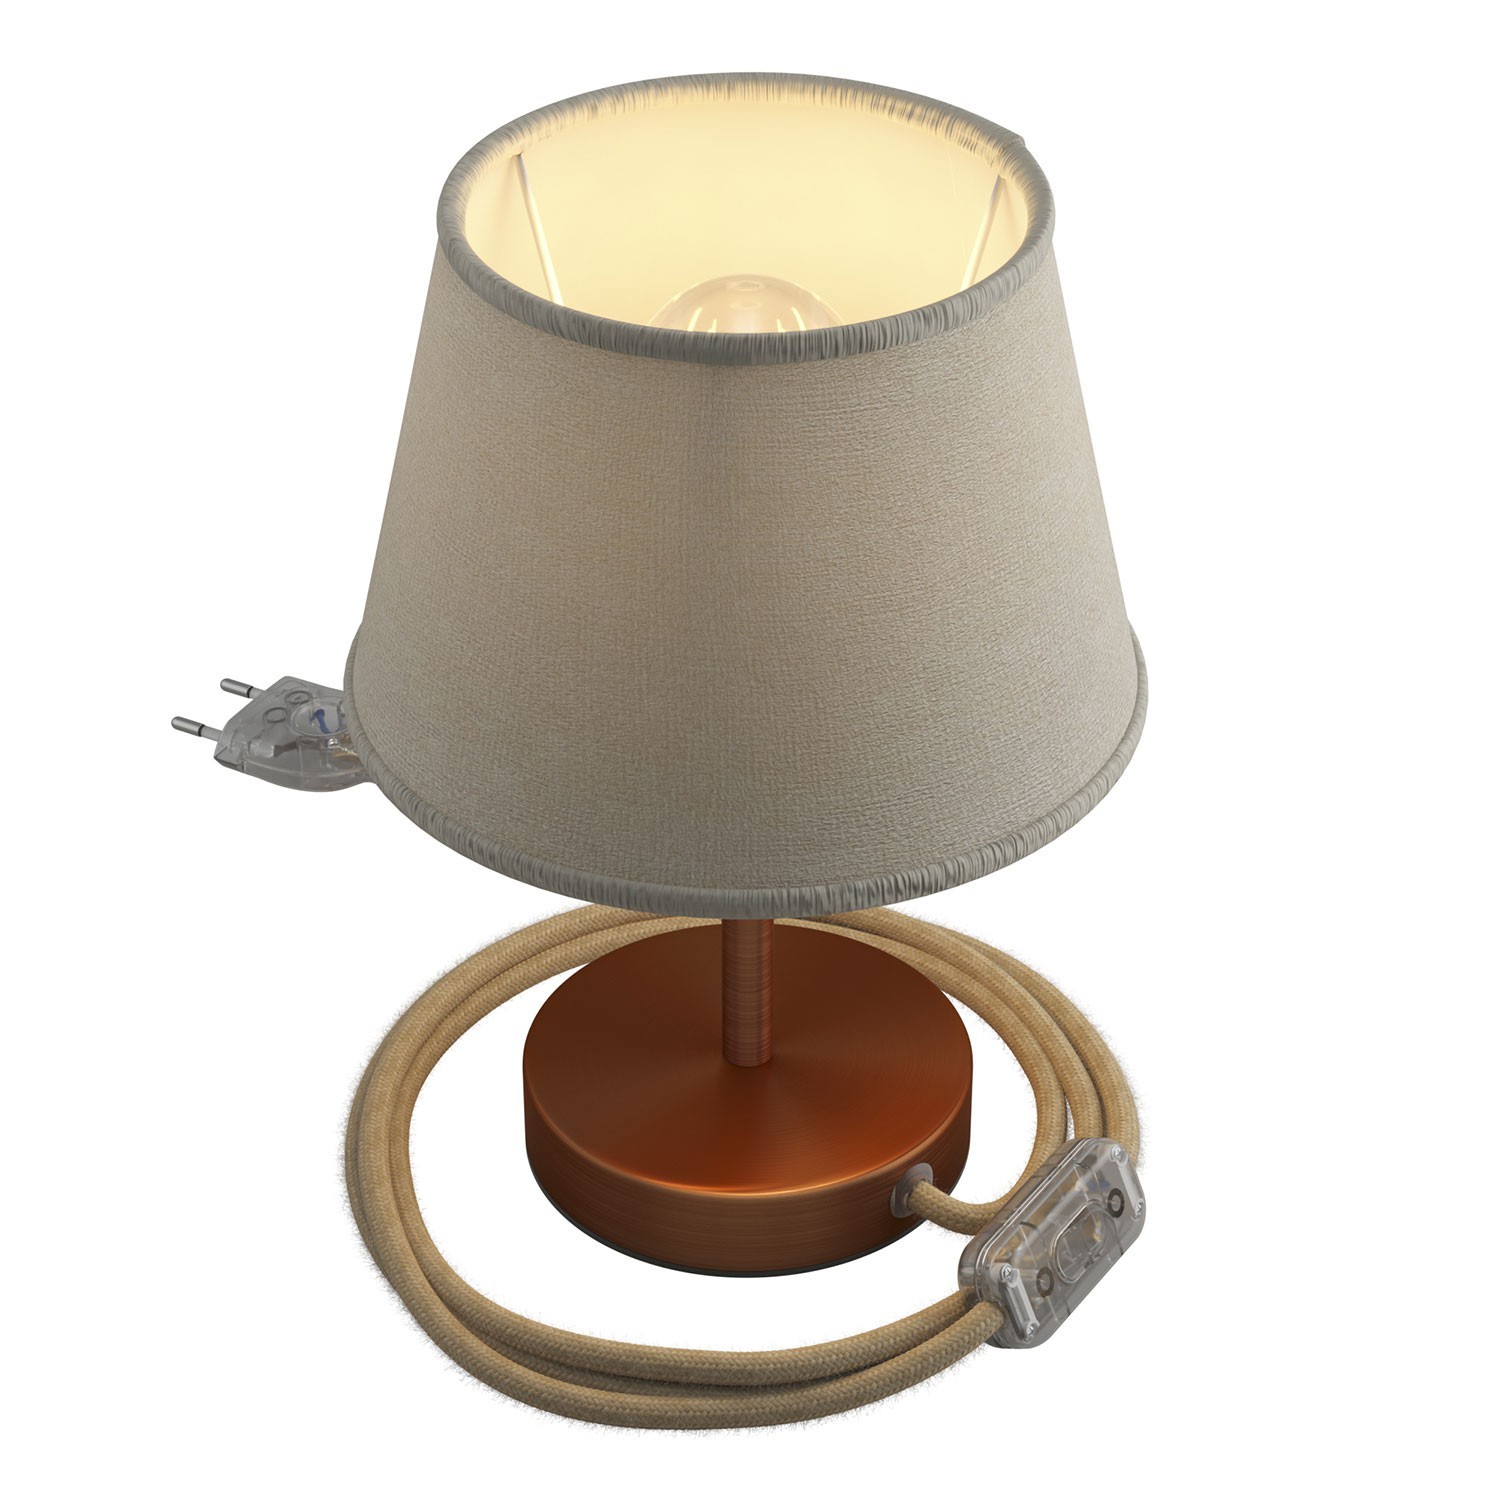 Alzaluce s Impero sjenilom, metalna stolna lampa s utikačem, tekstilnim kabelom i prekidačem